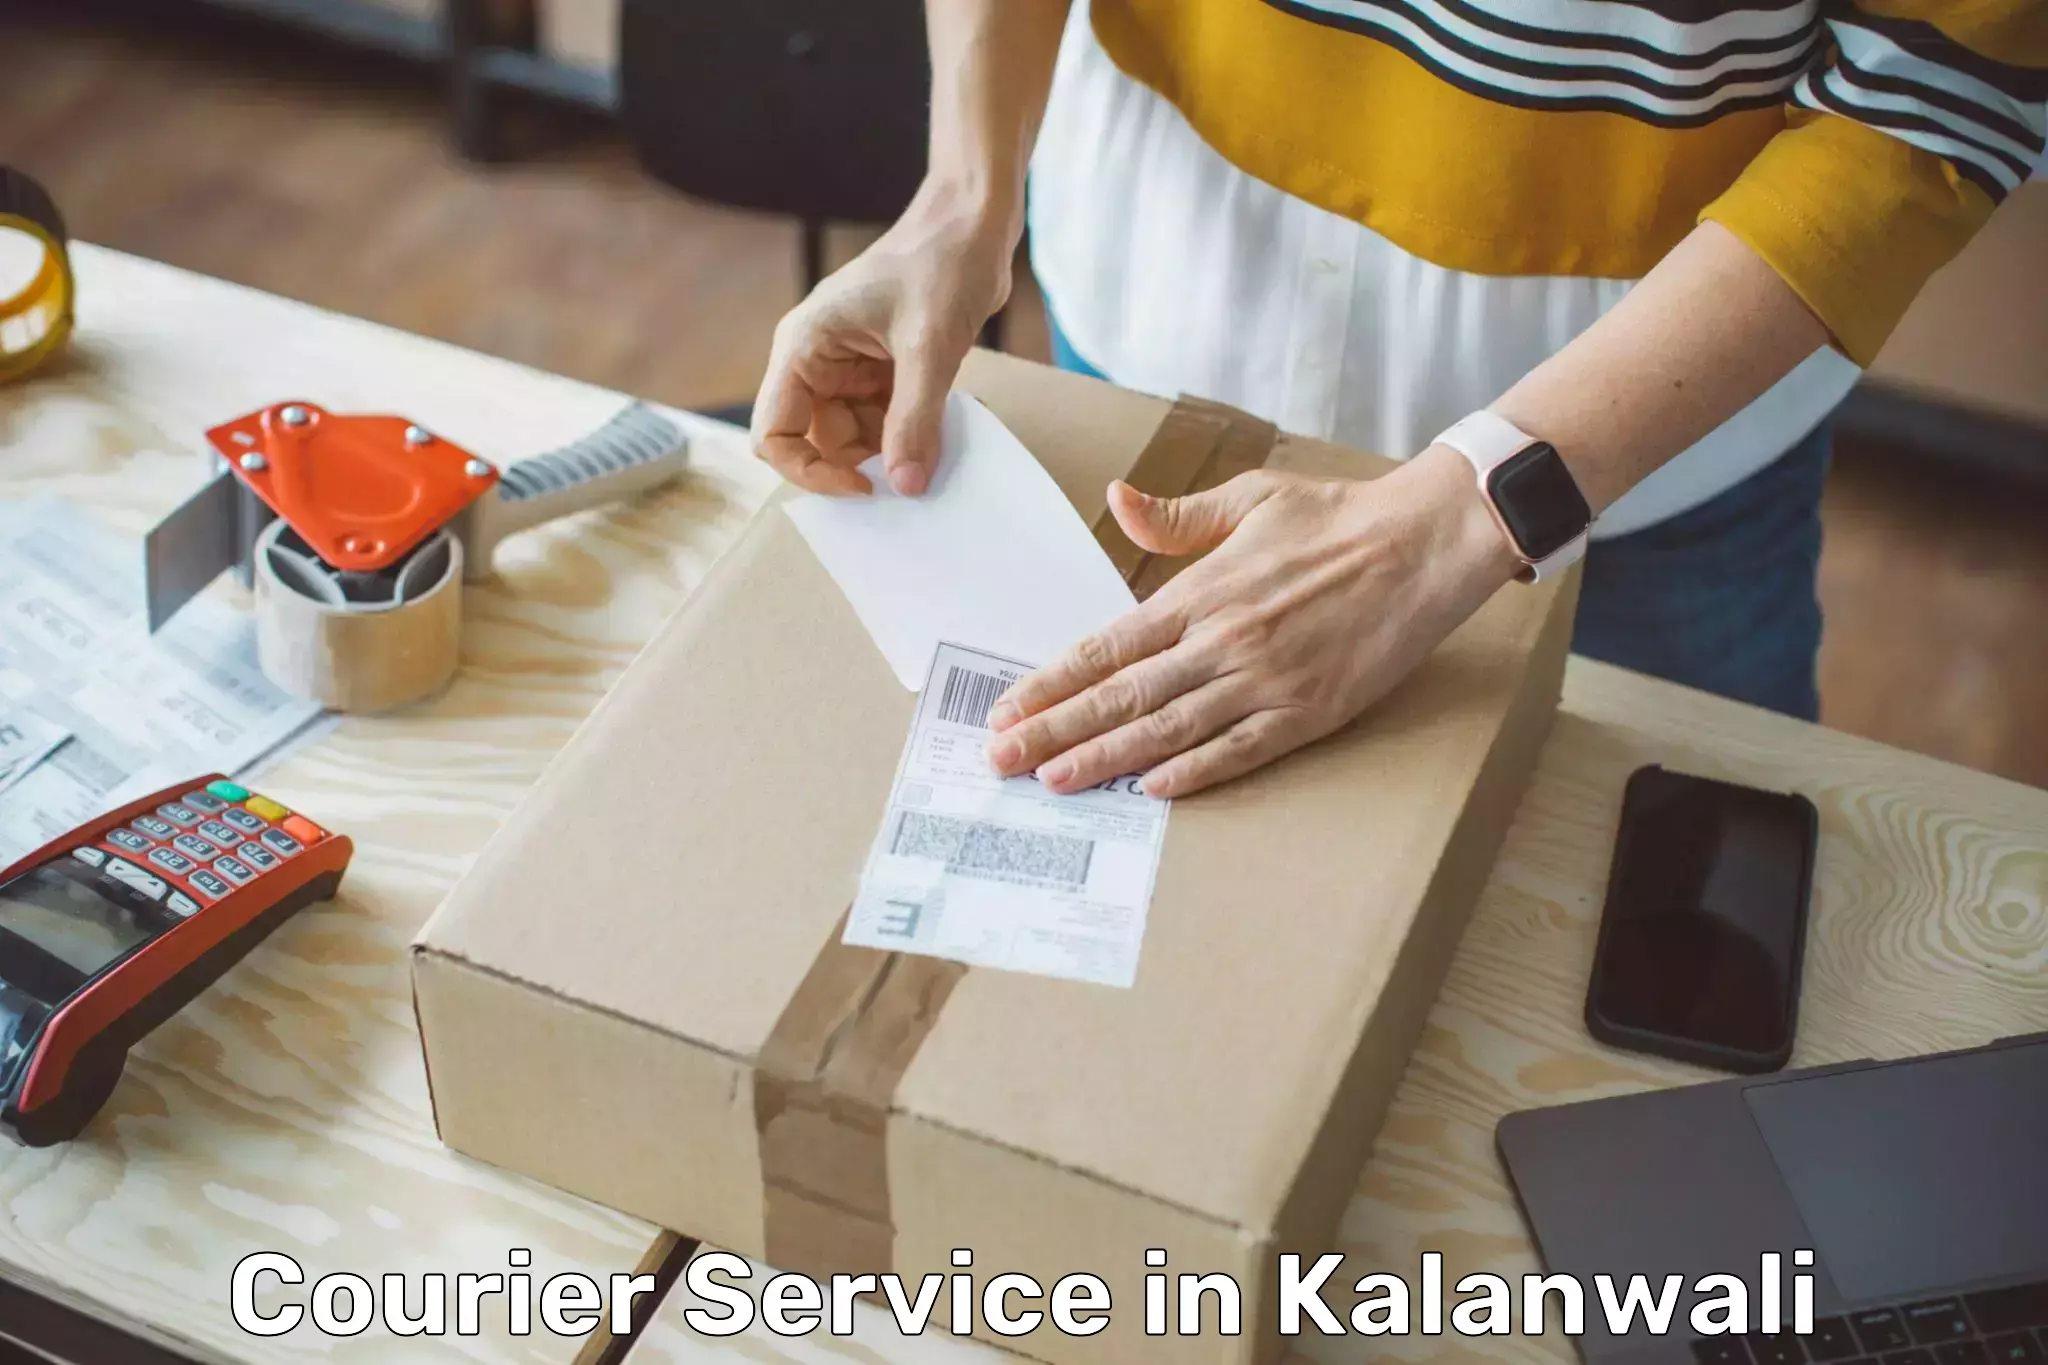 Comprehensive logistics solutions in Kalanwali